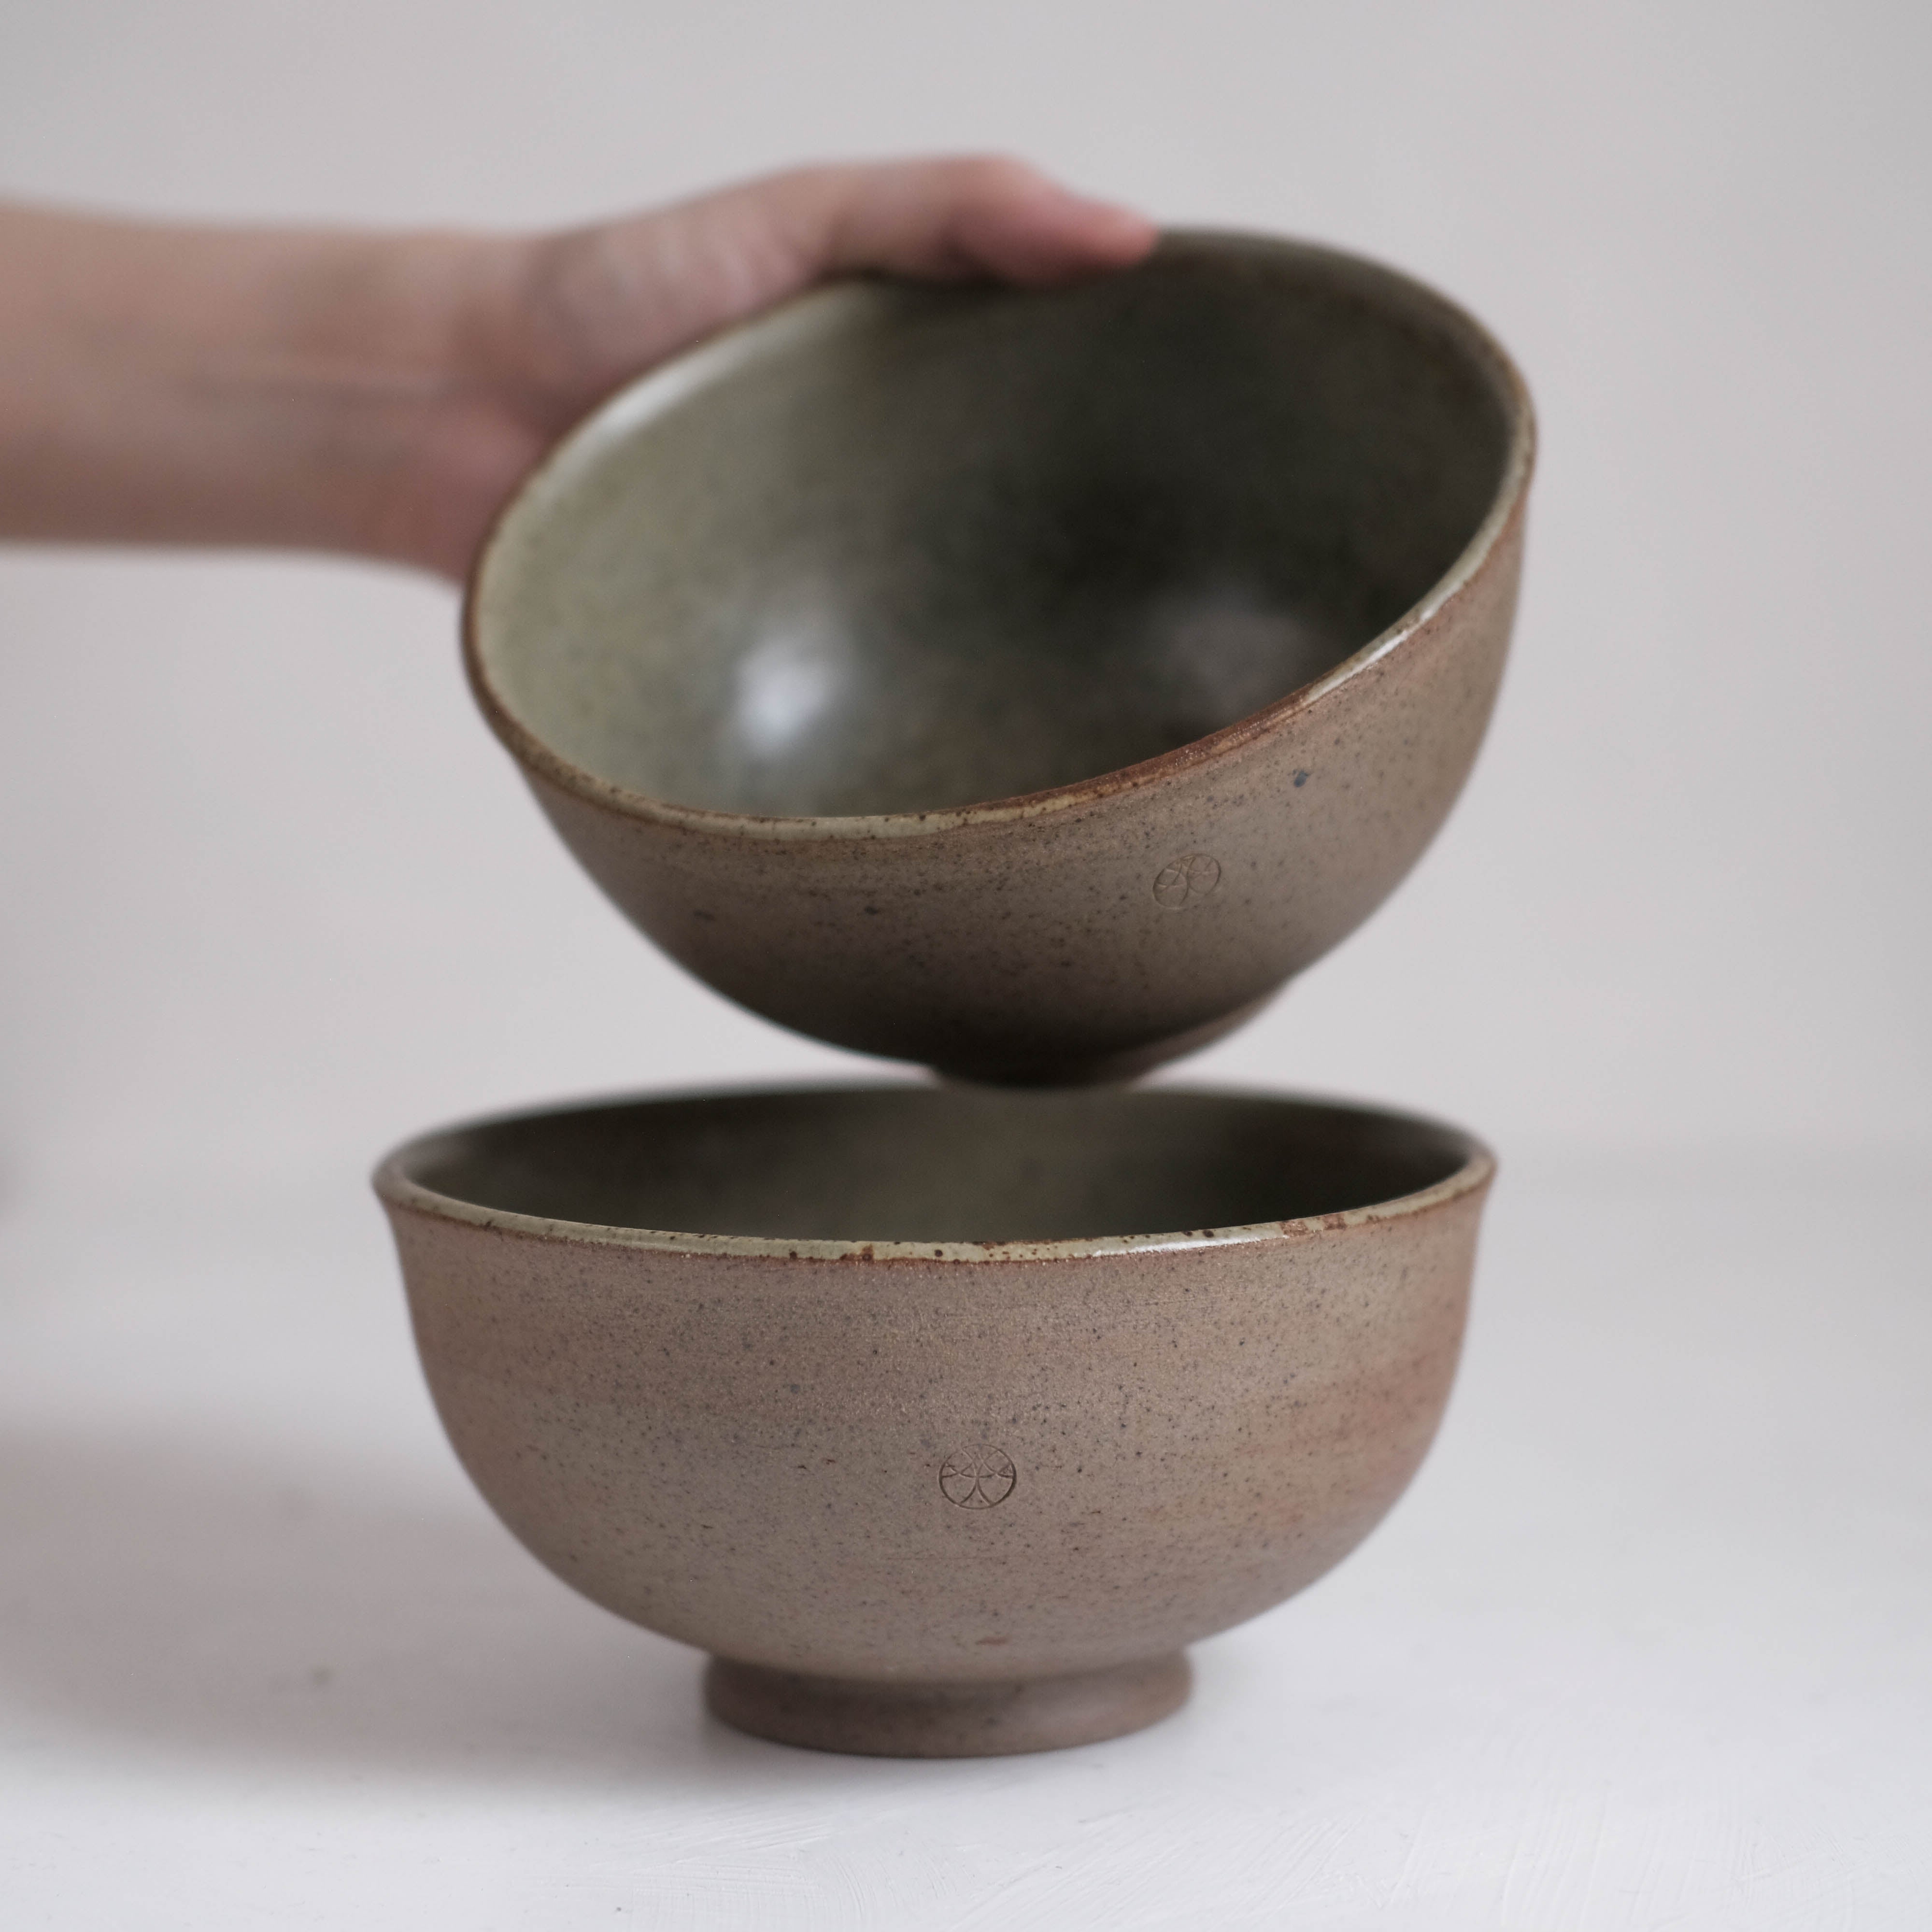 Haigusuri (灰釉) Bowl #ADN108 (Set of 2)